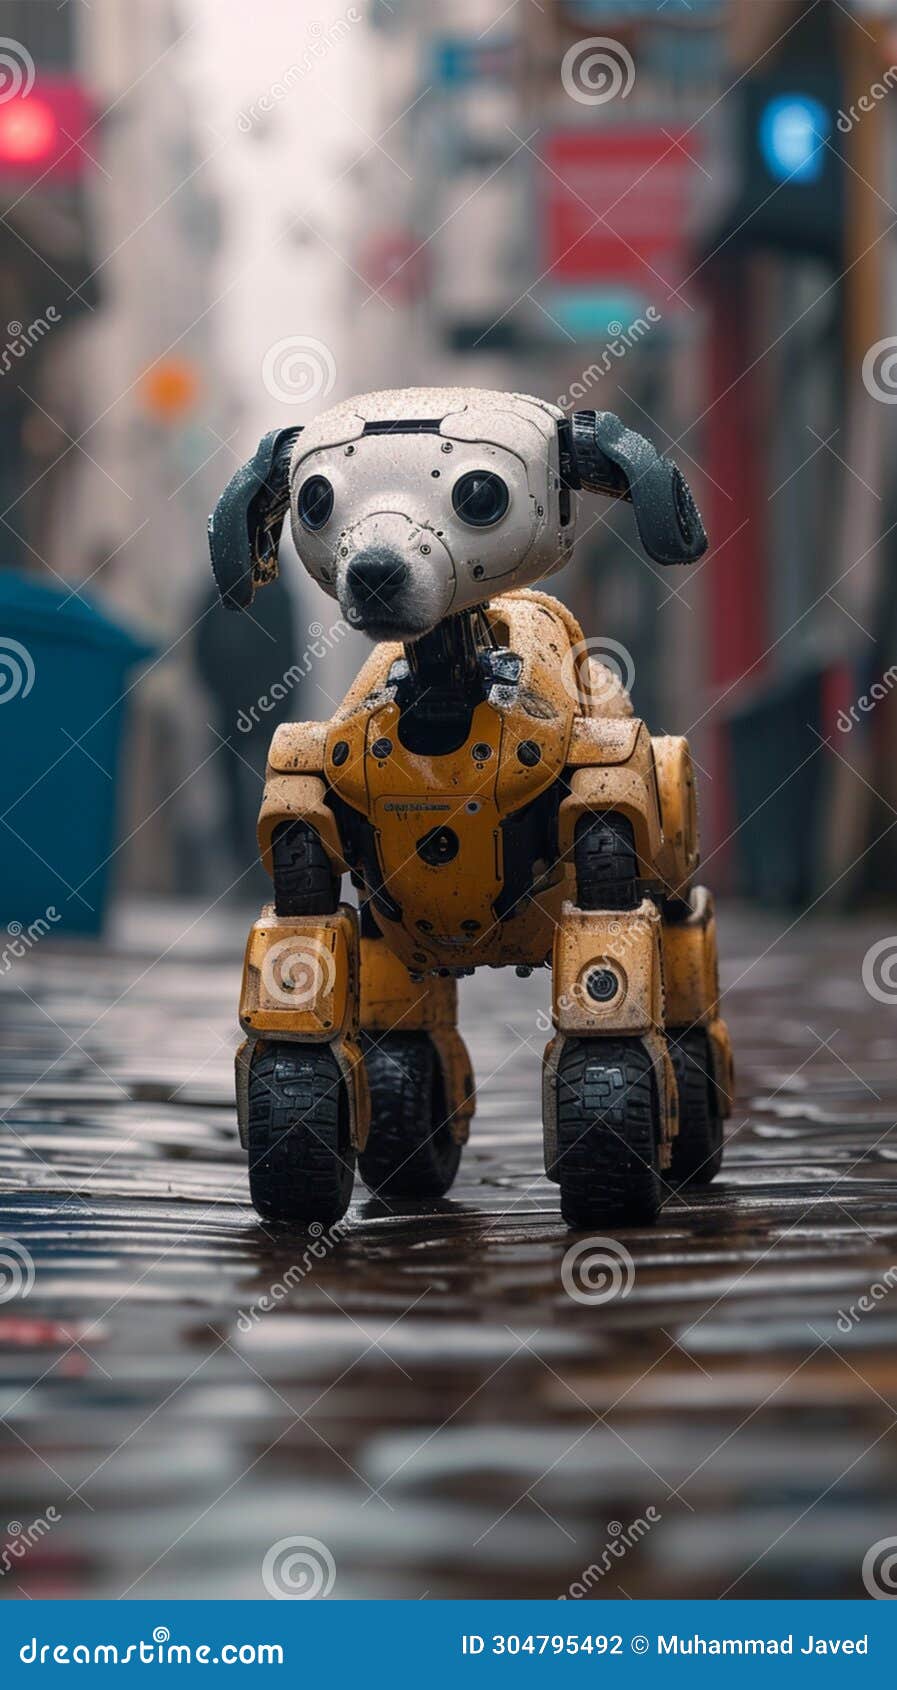 robo companion small robot dog strolling through the city streets